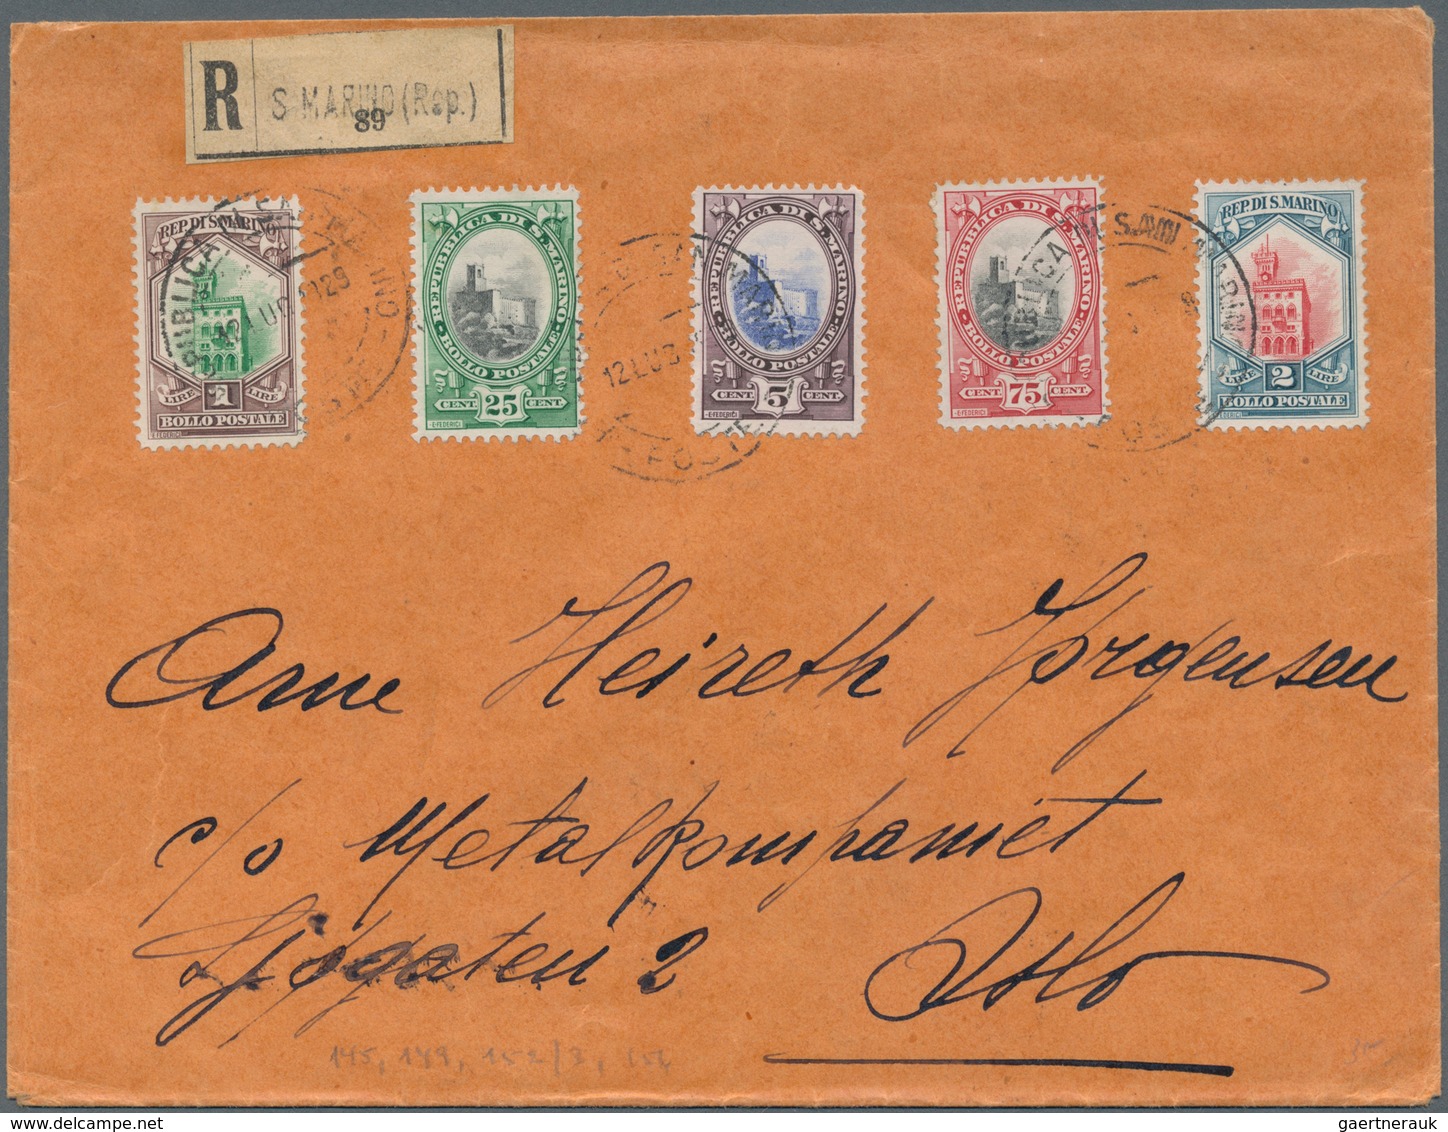 San Marino: 1929, 5 Colours Franking On Registered Letter (reverse "Ufficio Postale Di Citta") To Os - Unused Stamps